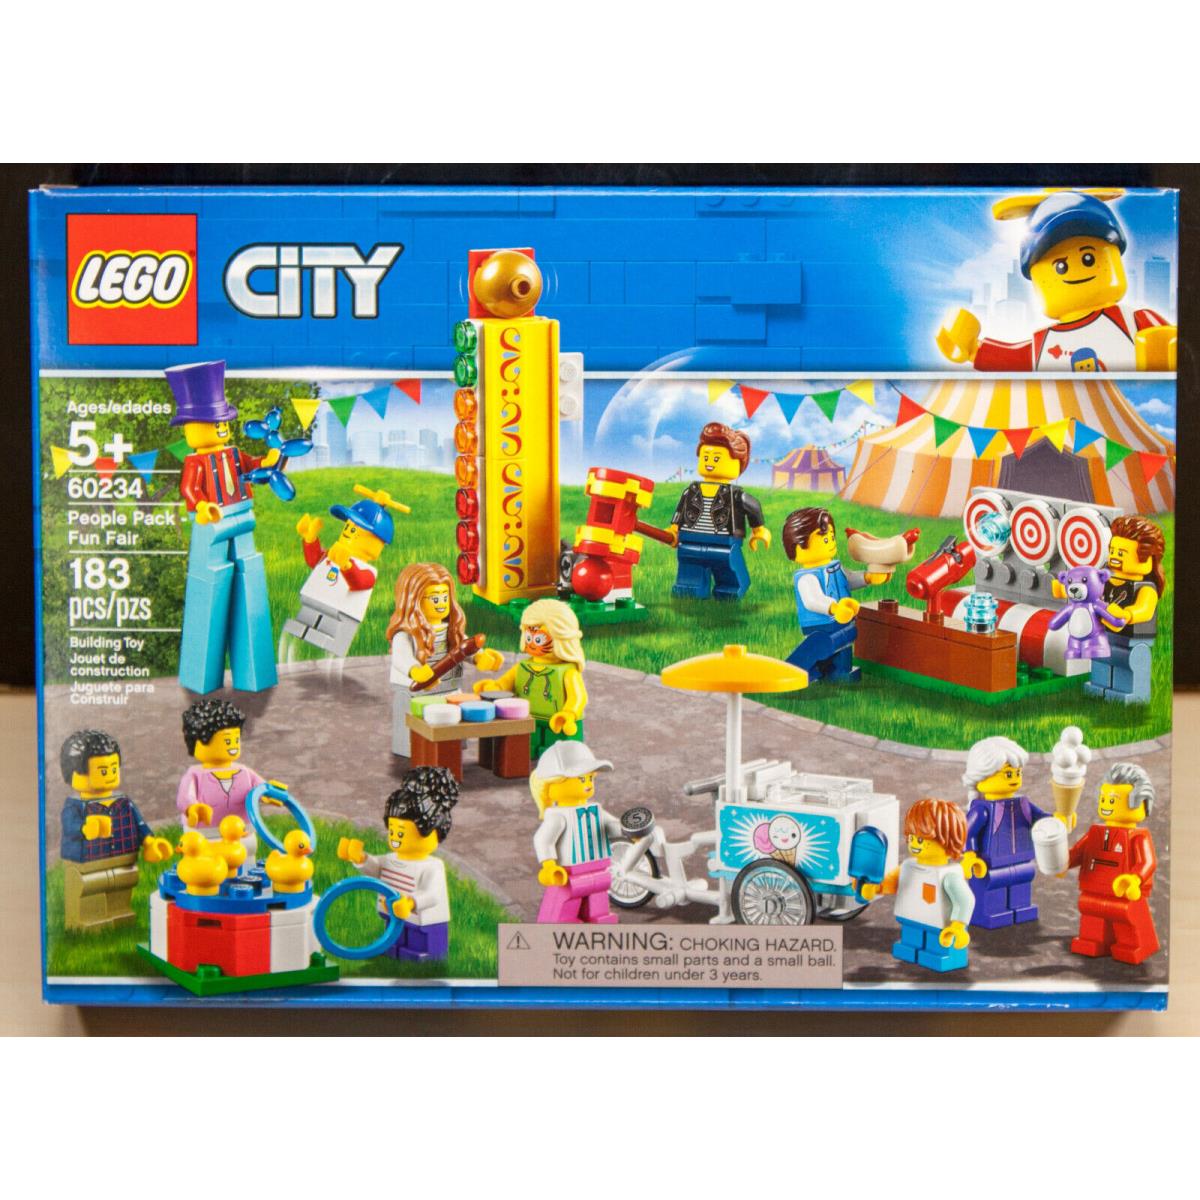 Lego City People Pack Fun Fair 60234 Box